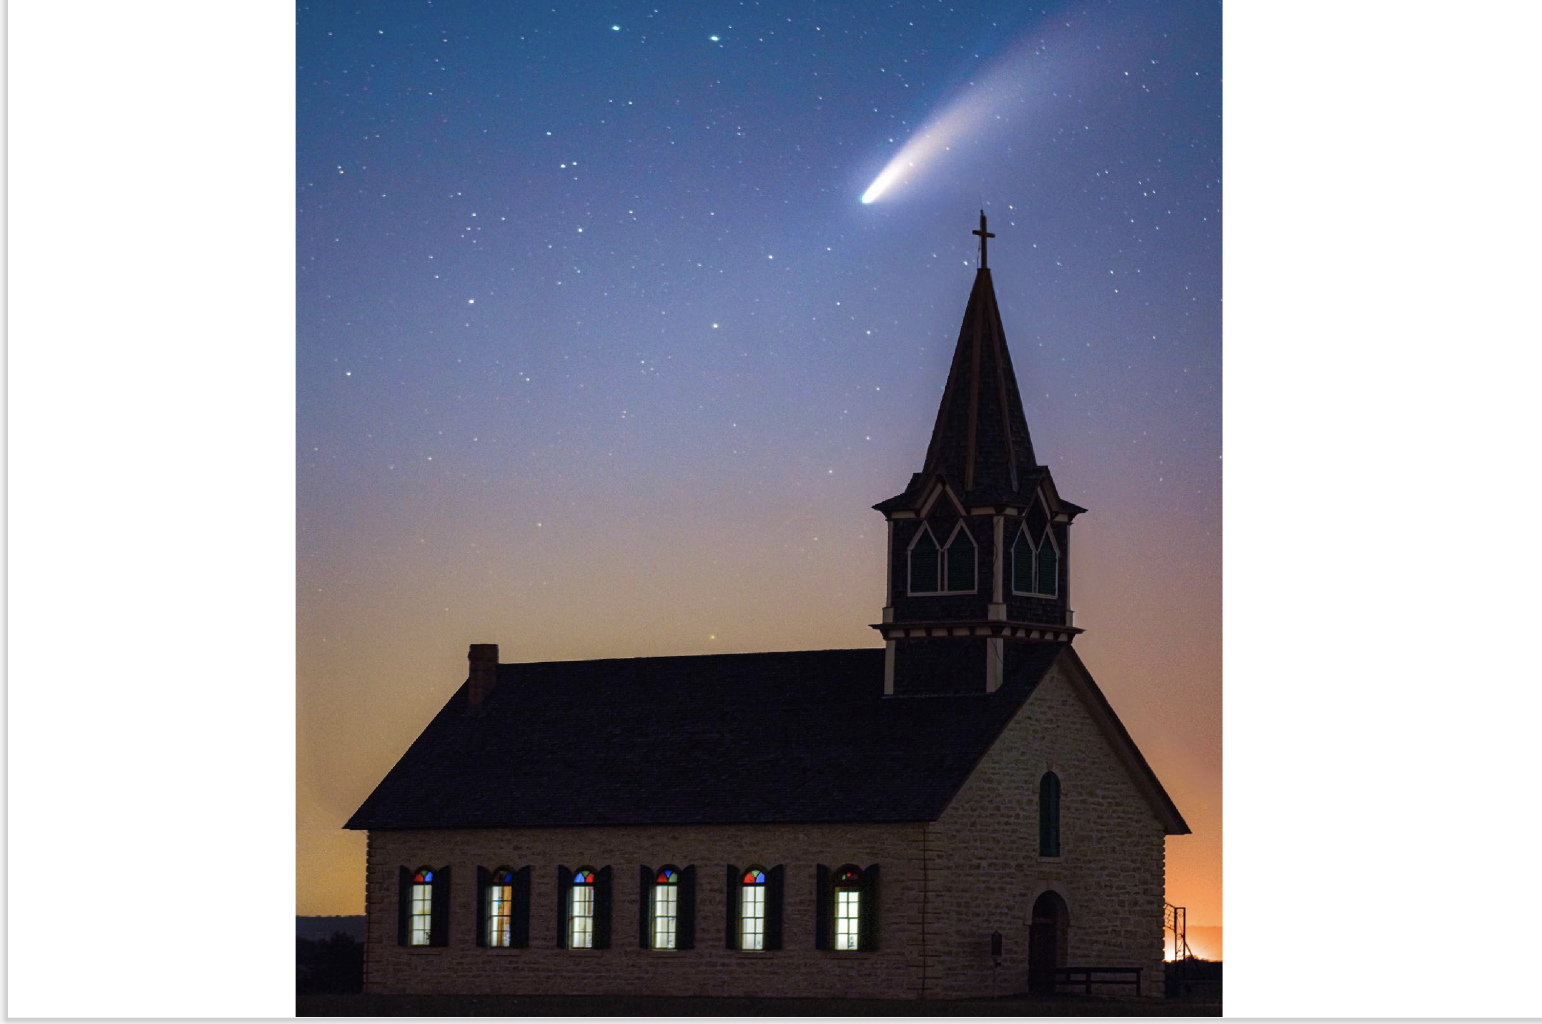 NEOWISE Comet streaks across the Texas sky